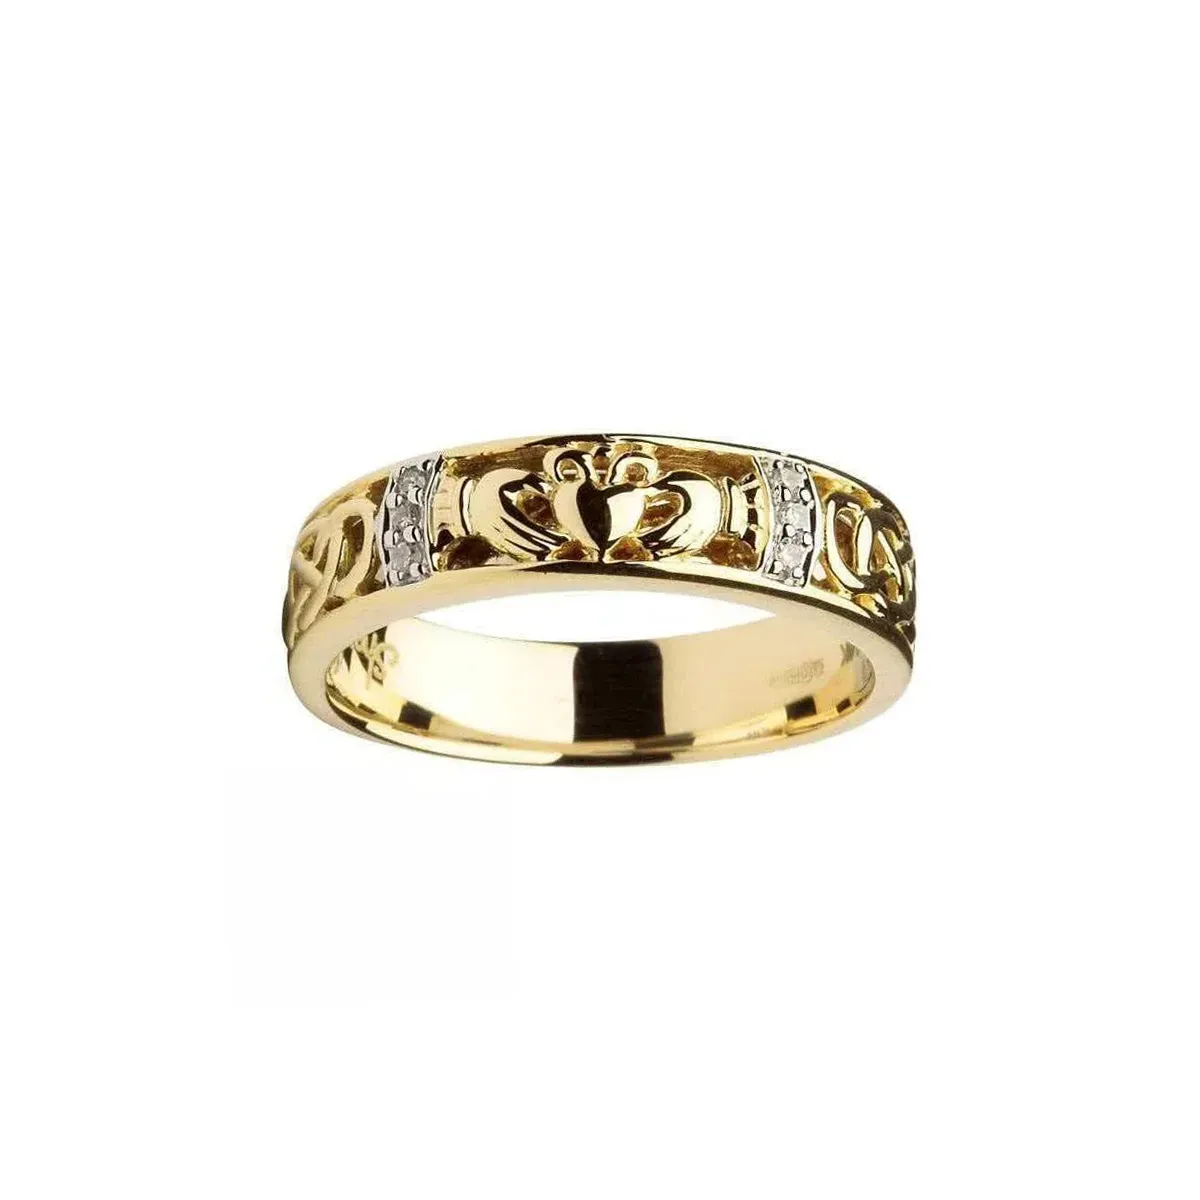 1_claddagh Diamond Ladies Wedding Ring With Celtic Knot Design 14IC3